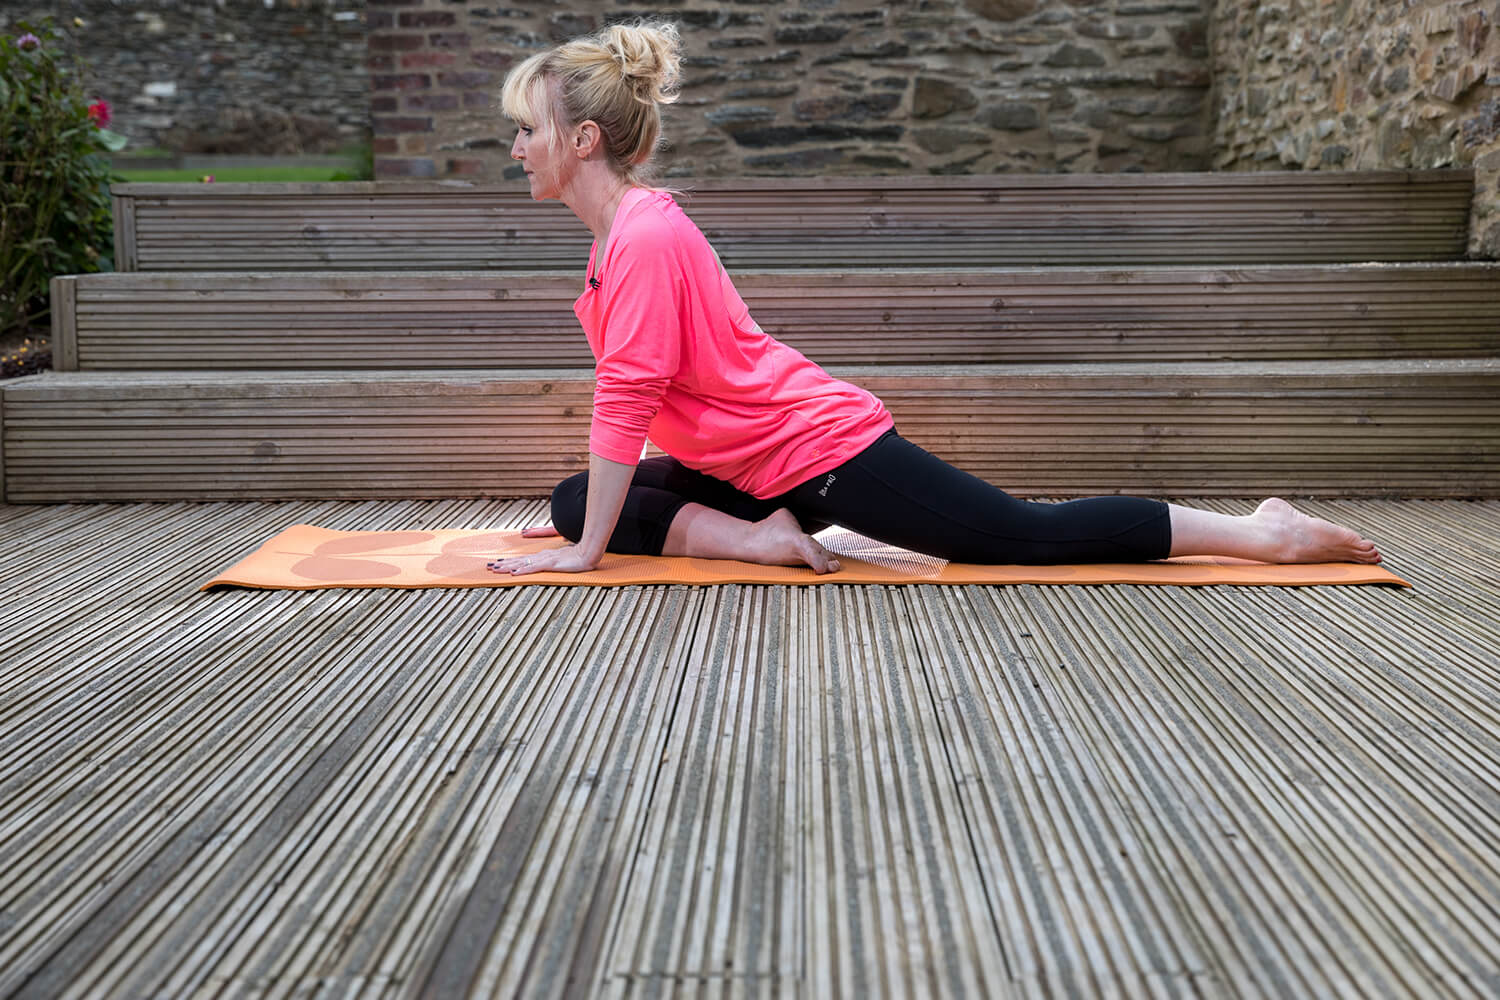 Women practising yoga outdoors on non-slip timber decking